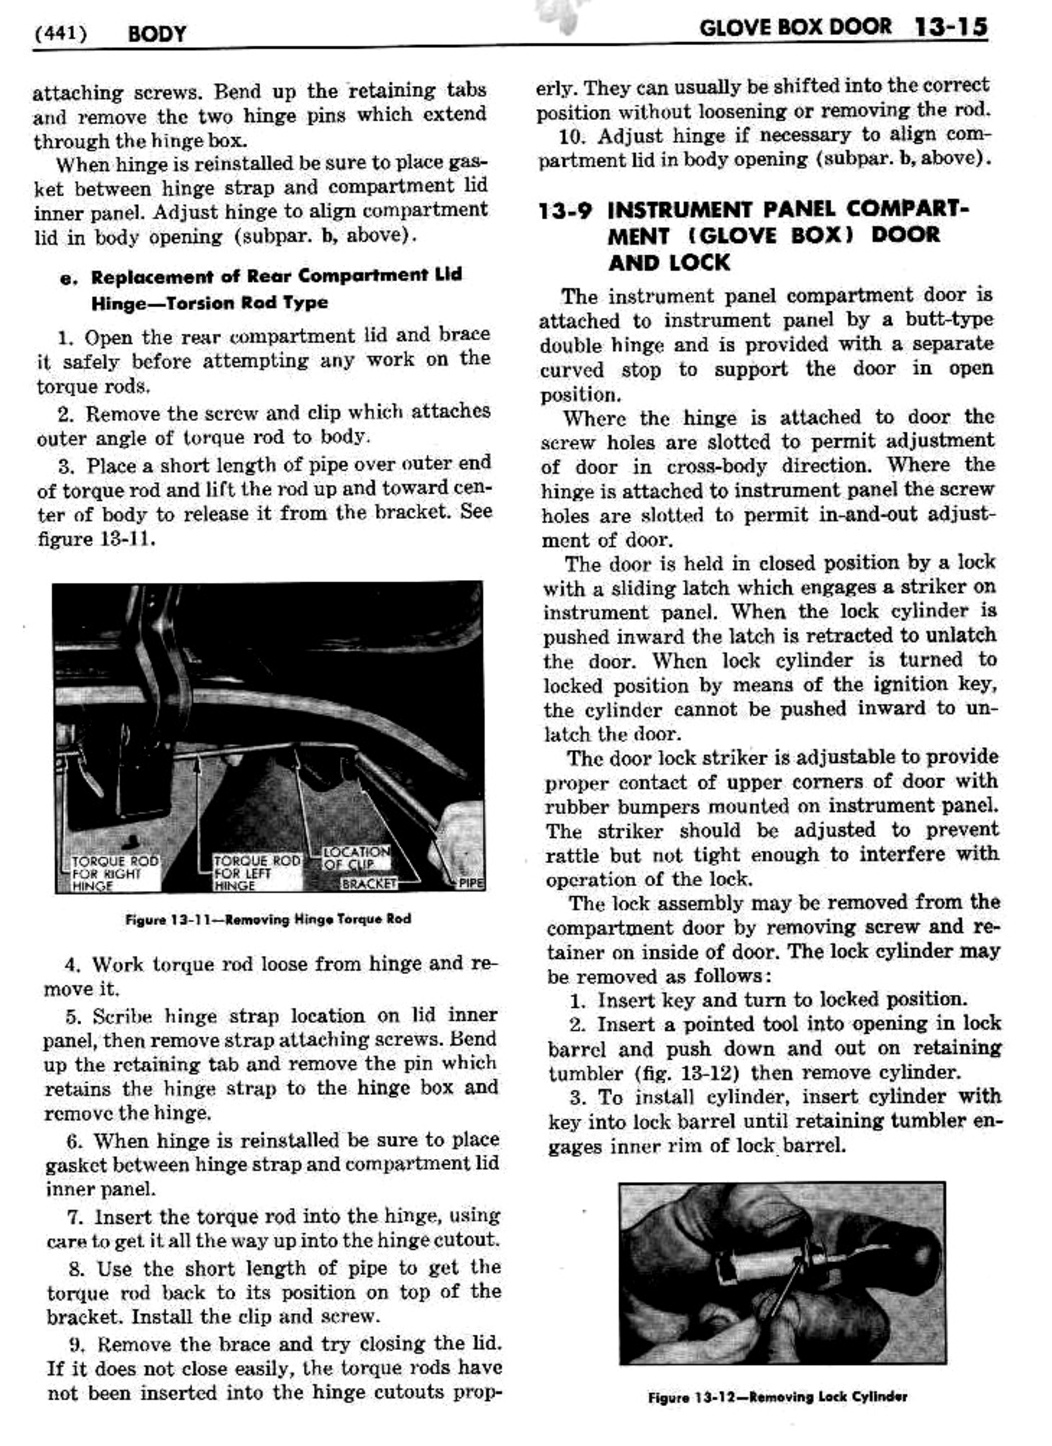 n_14 1951 Buick Shop Manual - Body-015-015.jpg